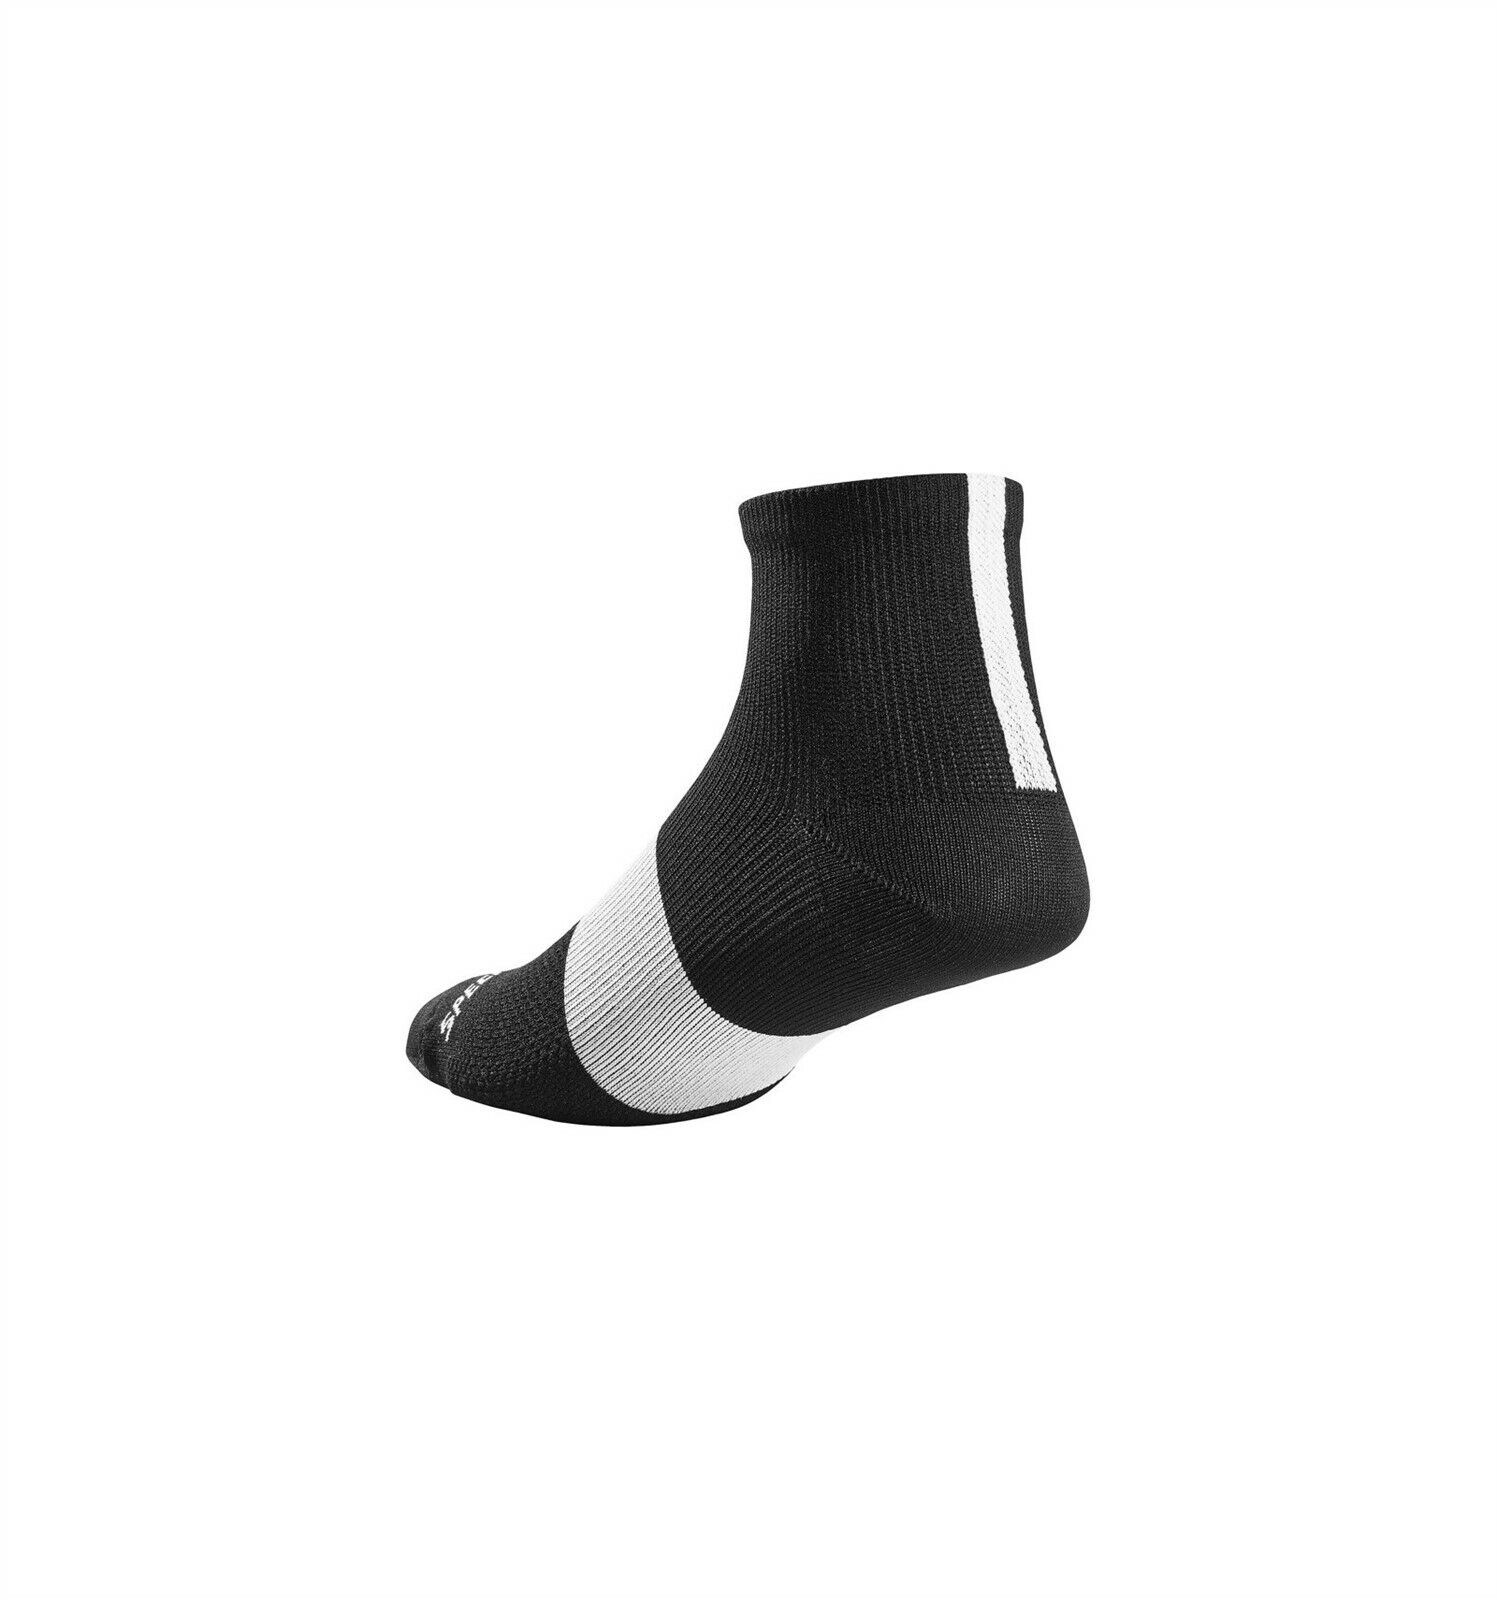 Specialized Women's SL Mid Socks Small/Medium in Black